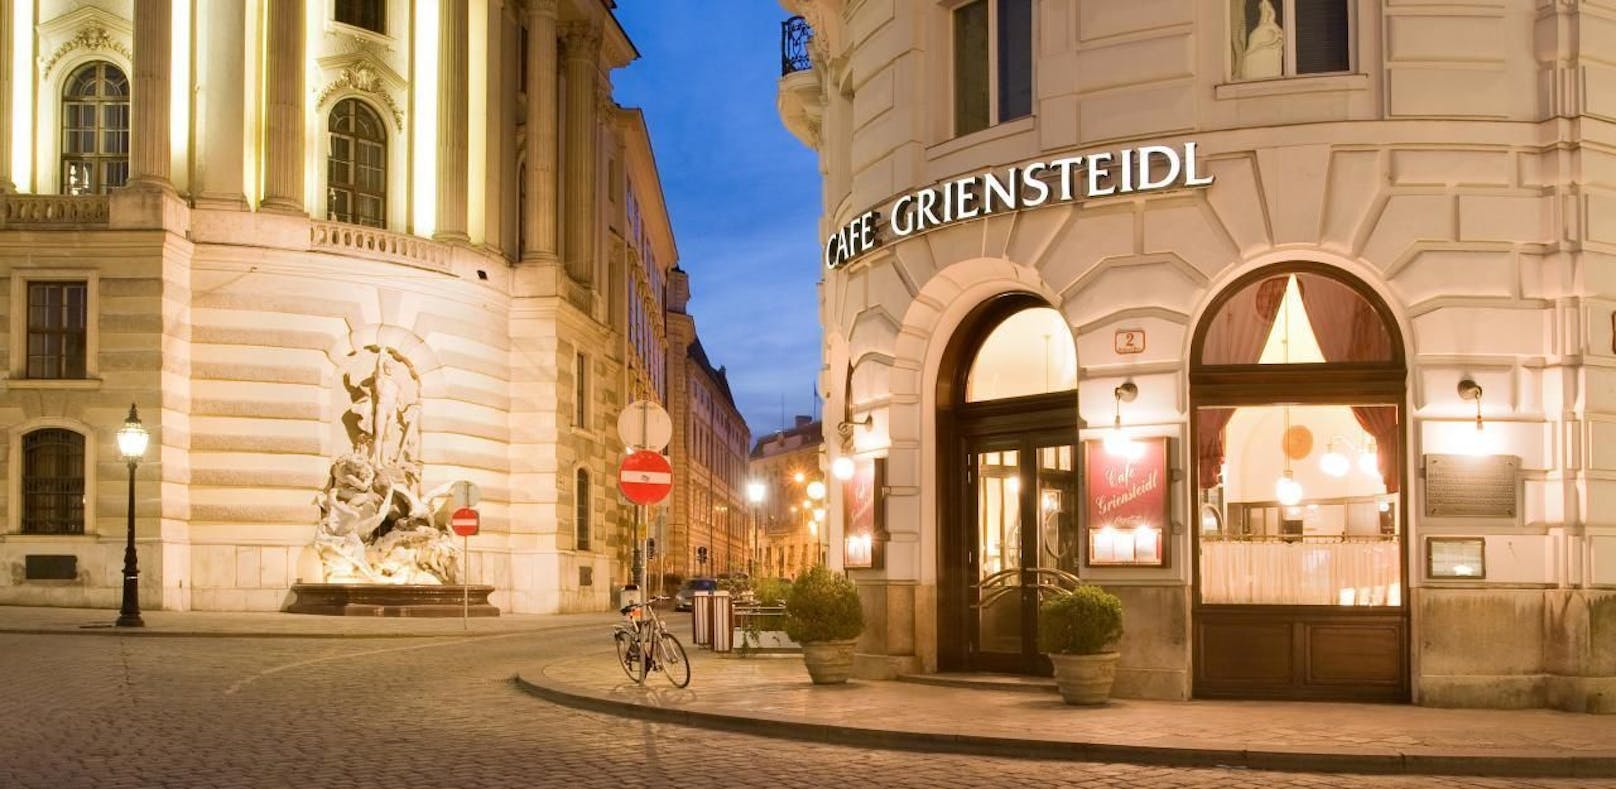 Das ehemalige Café Griensteidl - jetzt Café Klimt!